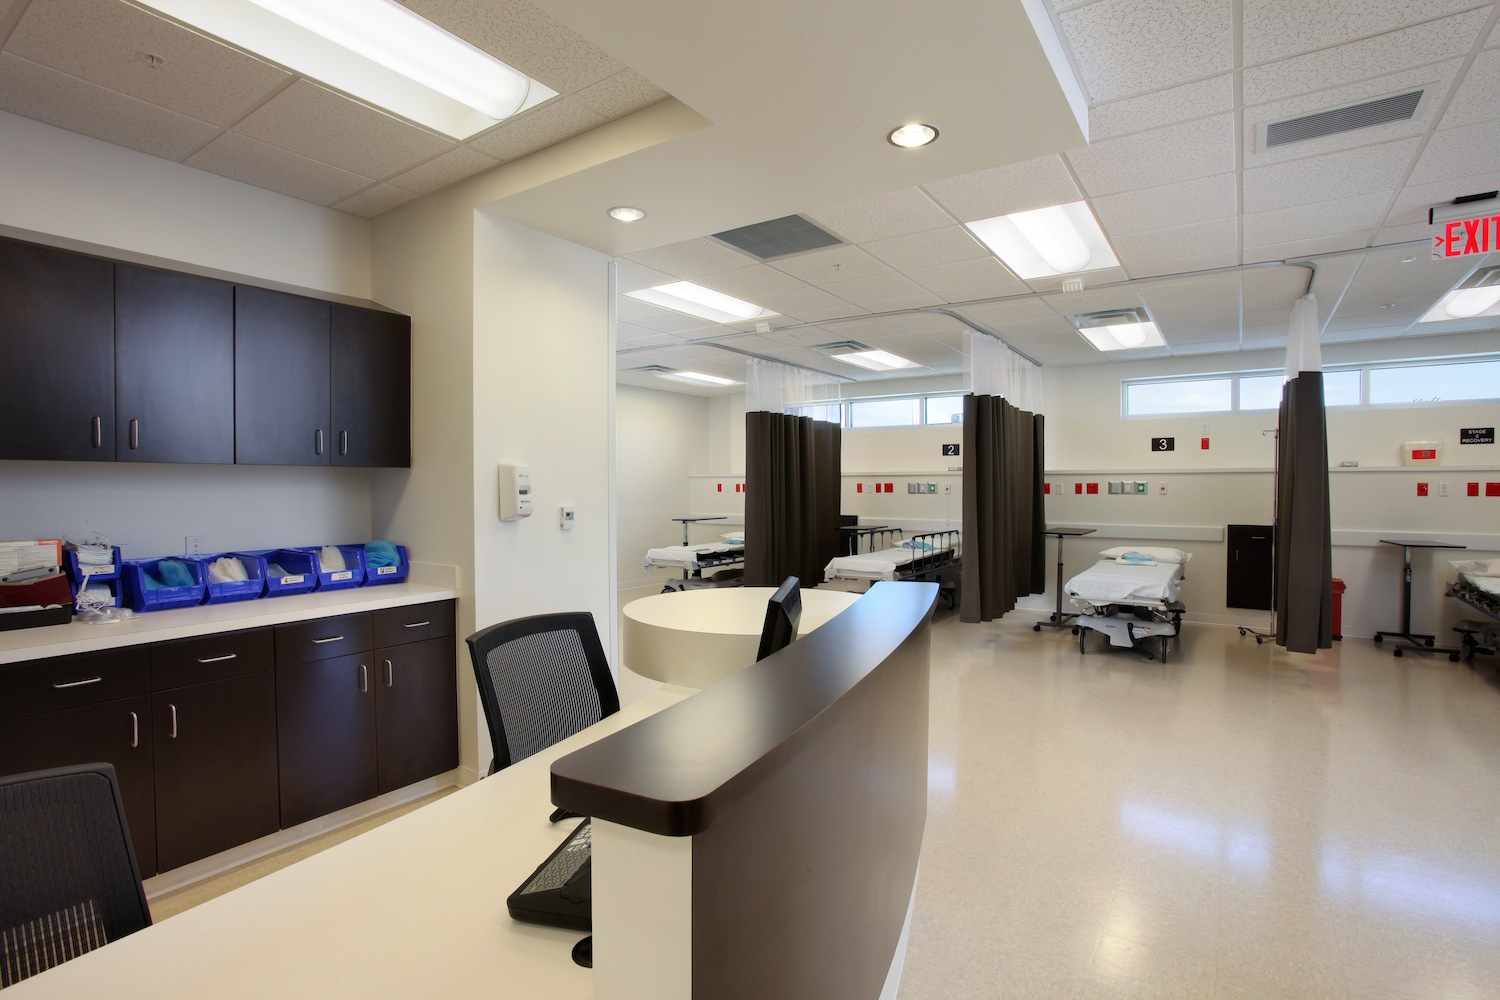 Surgery Center of Viera - Recovery Unit Nurse's Station